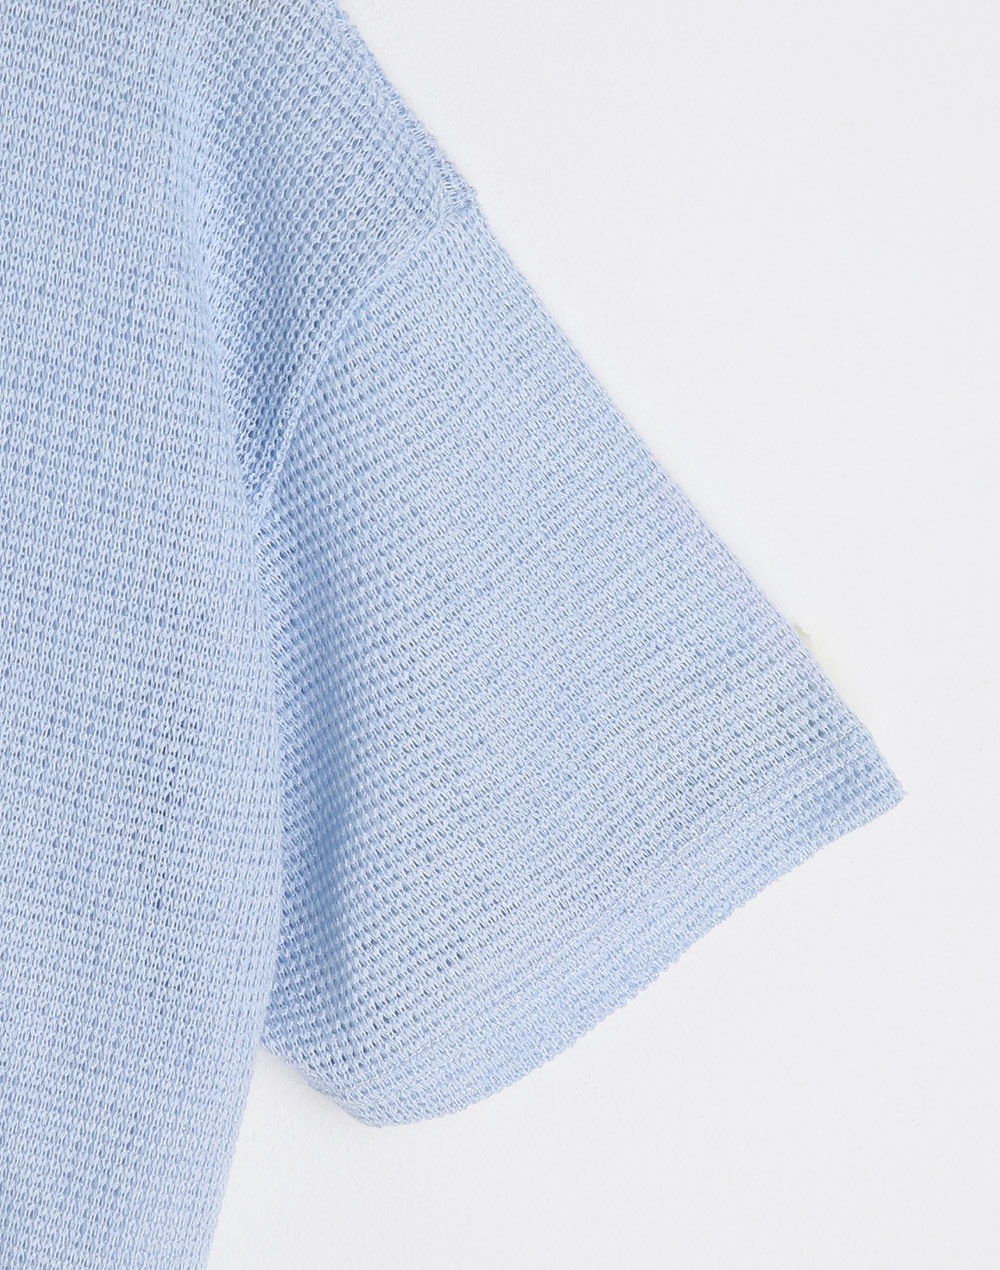 mesh ribbon  summer cardigan・t283434（トップス/カーディガン）| rirry_71 | 東京ガールズマーケット